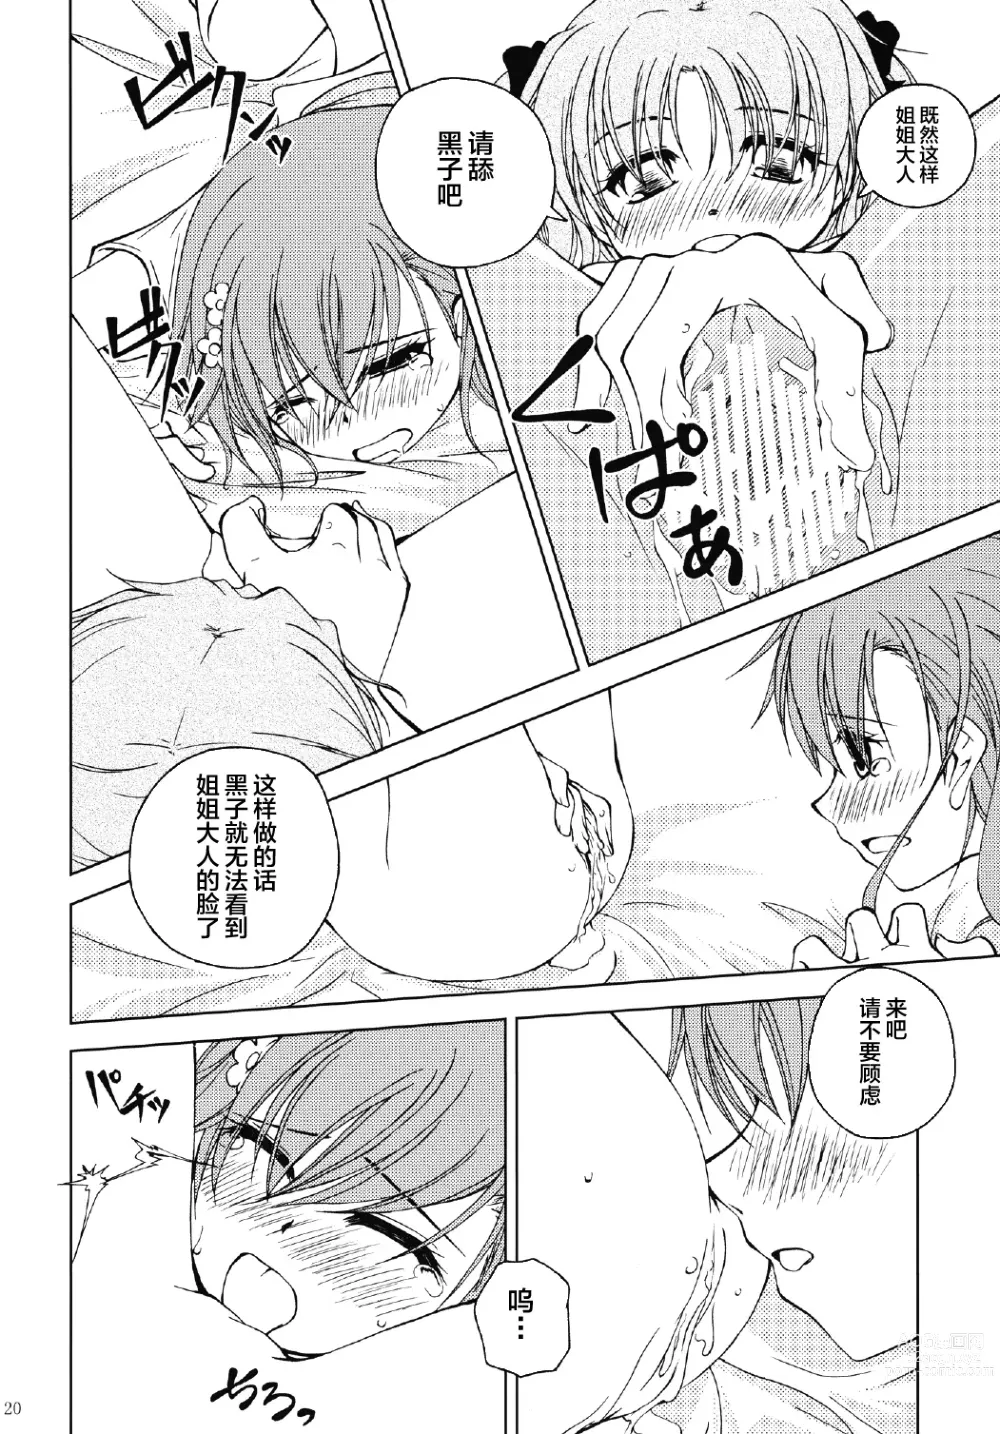 Page 20 of doujinshi Onee-sama o Ruijinen to Sememakuri desu no!!